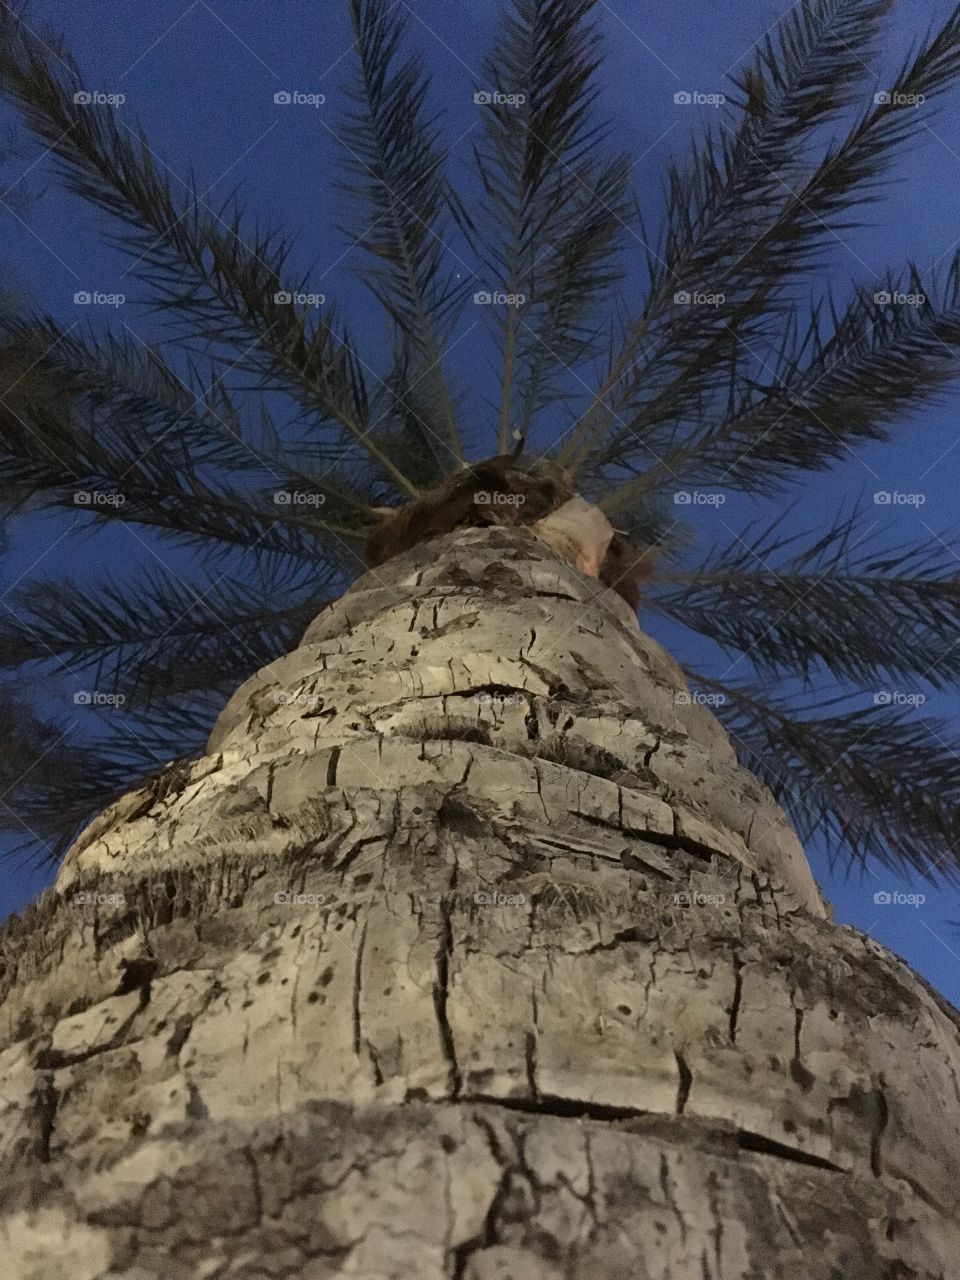 California palm tree